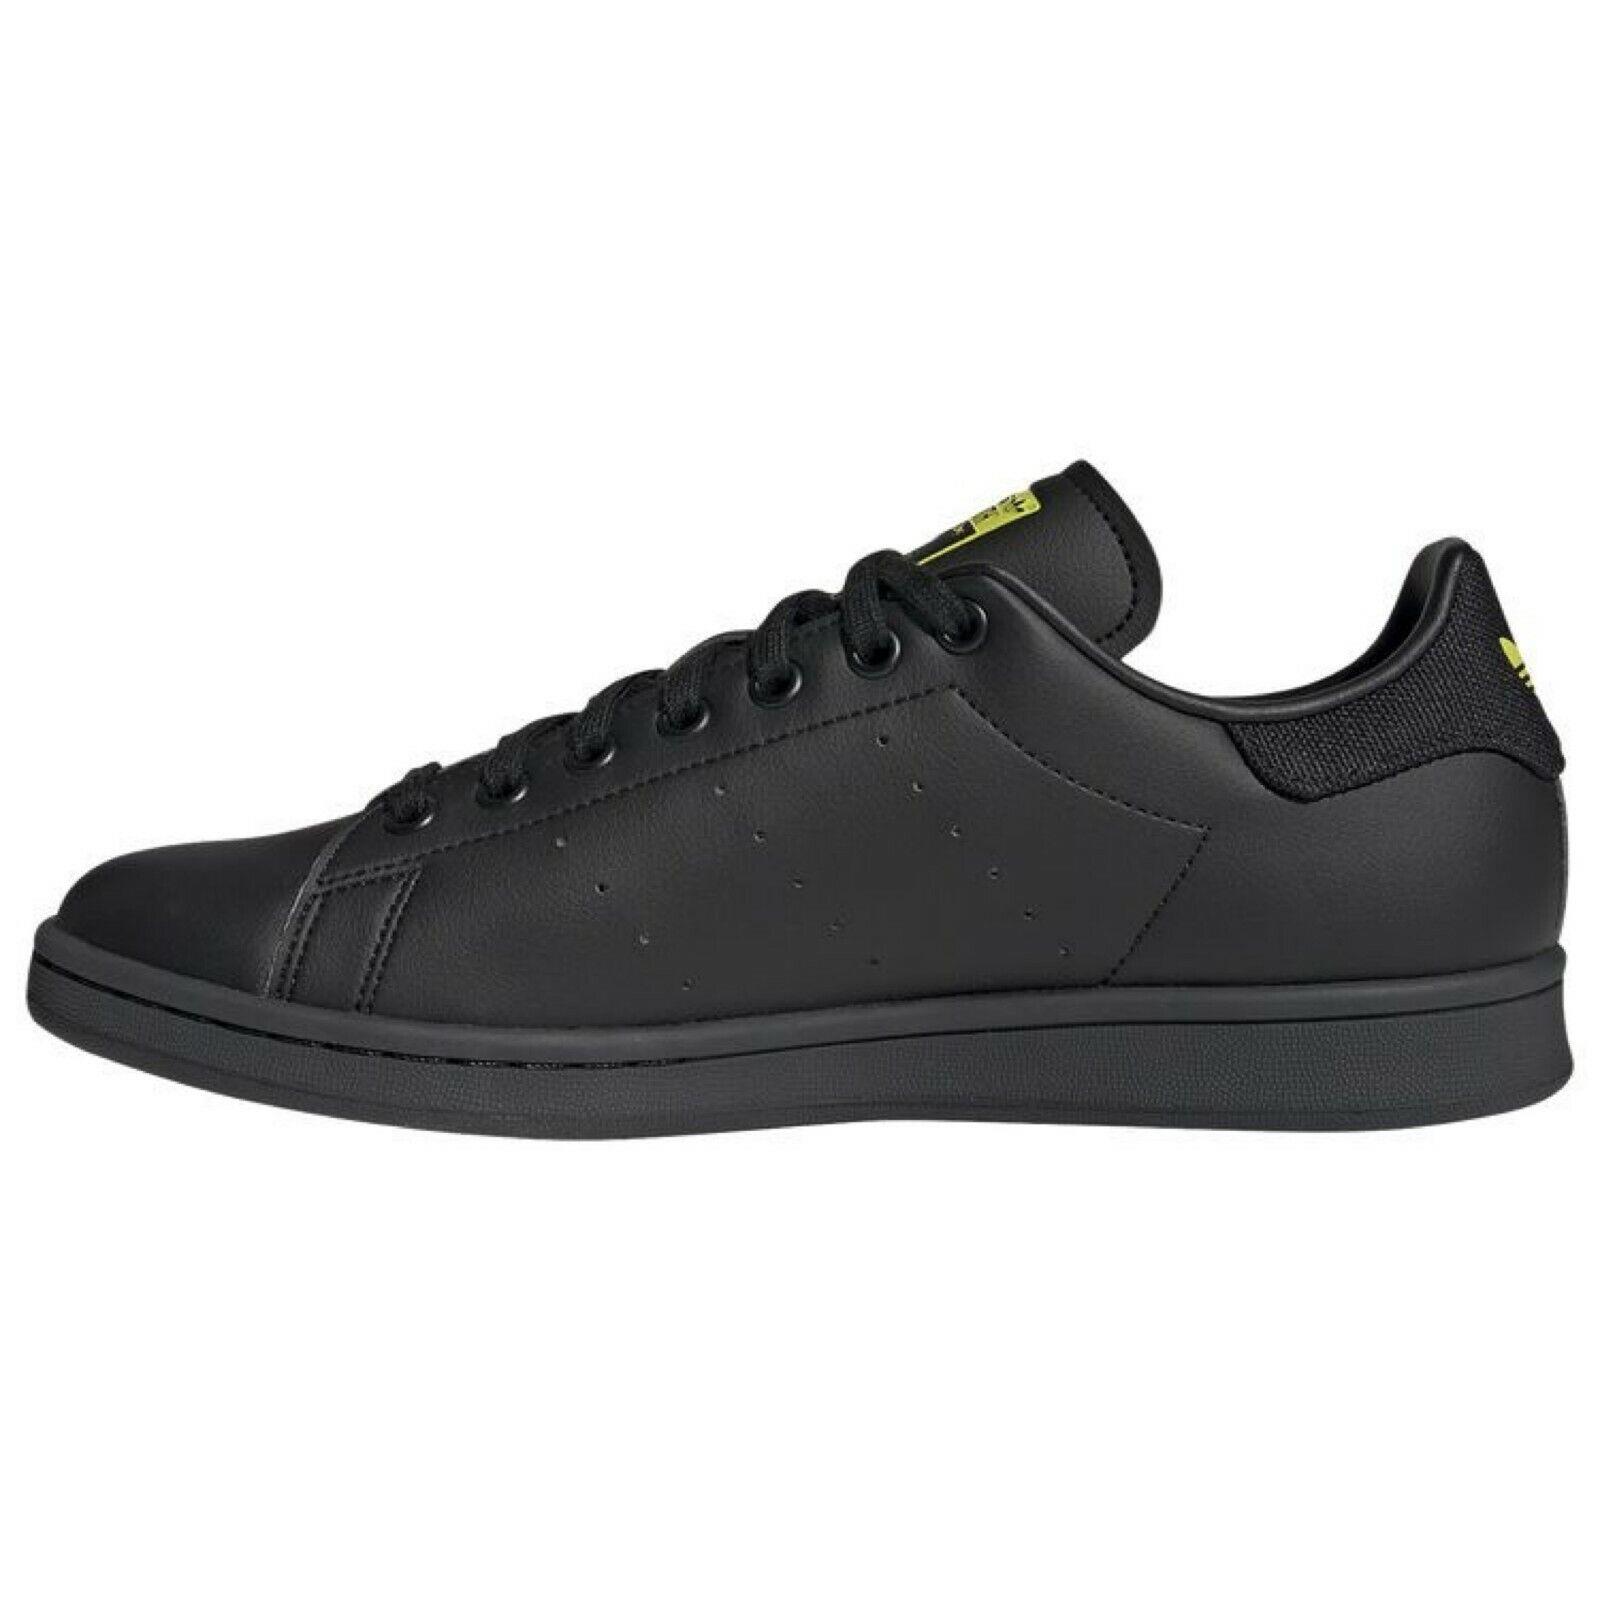 Adidas shoes Originals Stan Smith - Black , Black/Volt Manufacturer 3